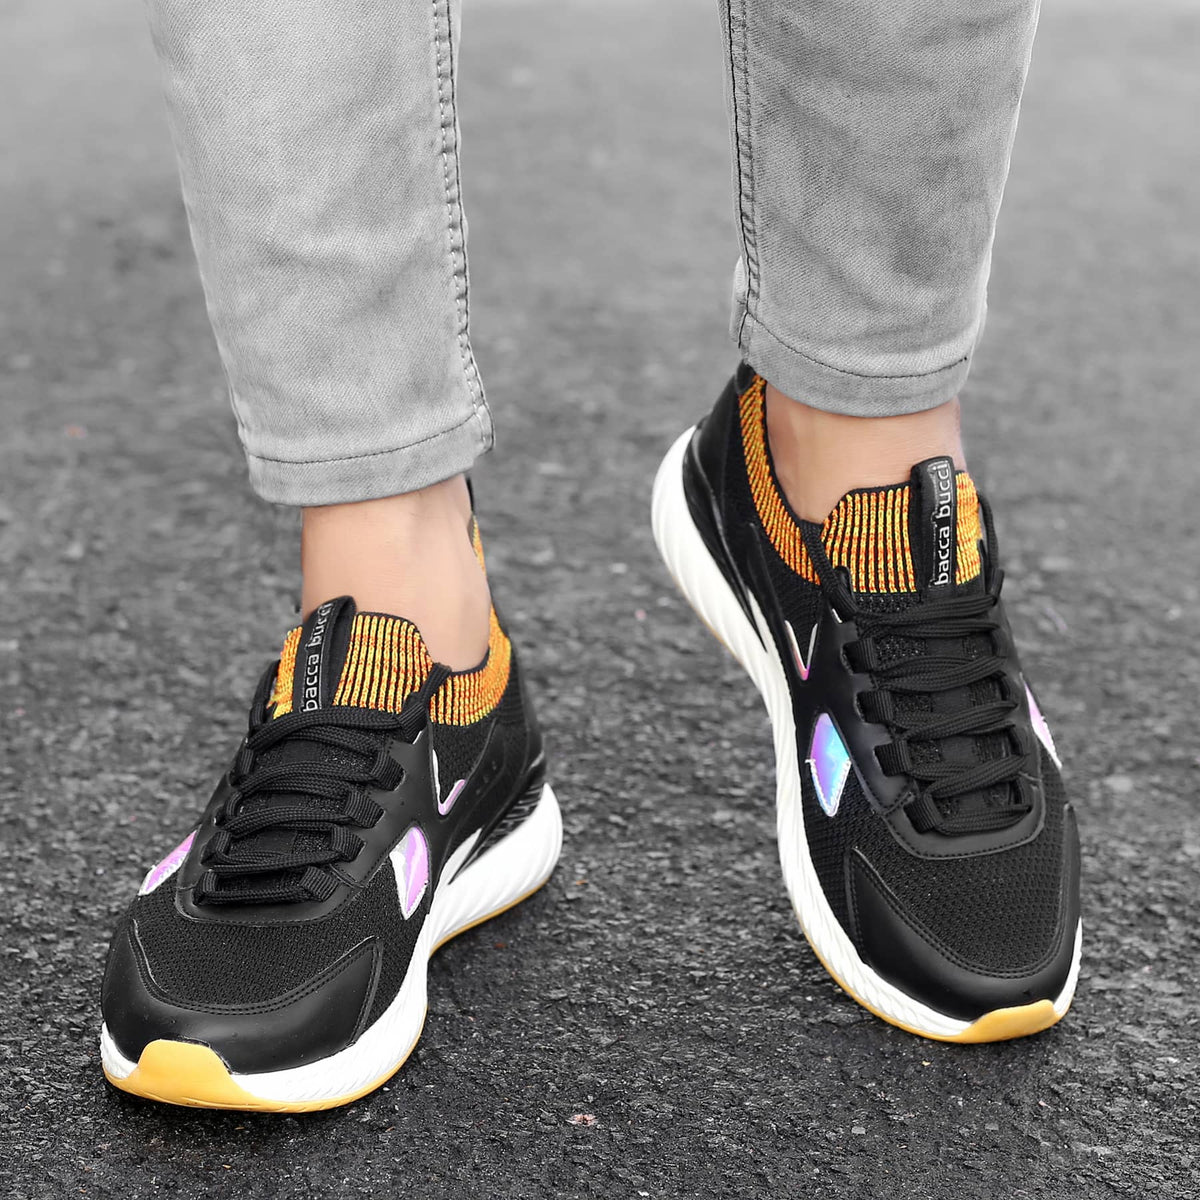 Bacca Bucci DISTINCT Mid-Top Urban Streetwear Socks Sneakers